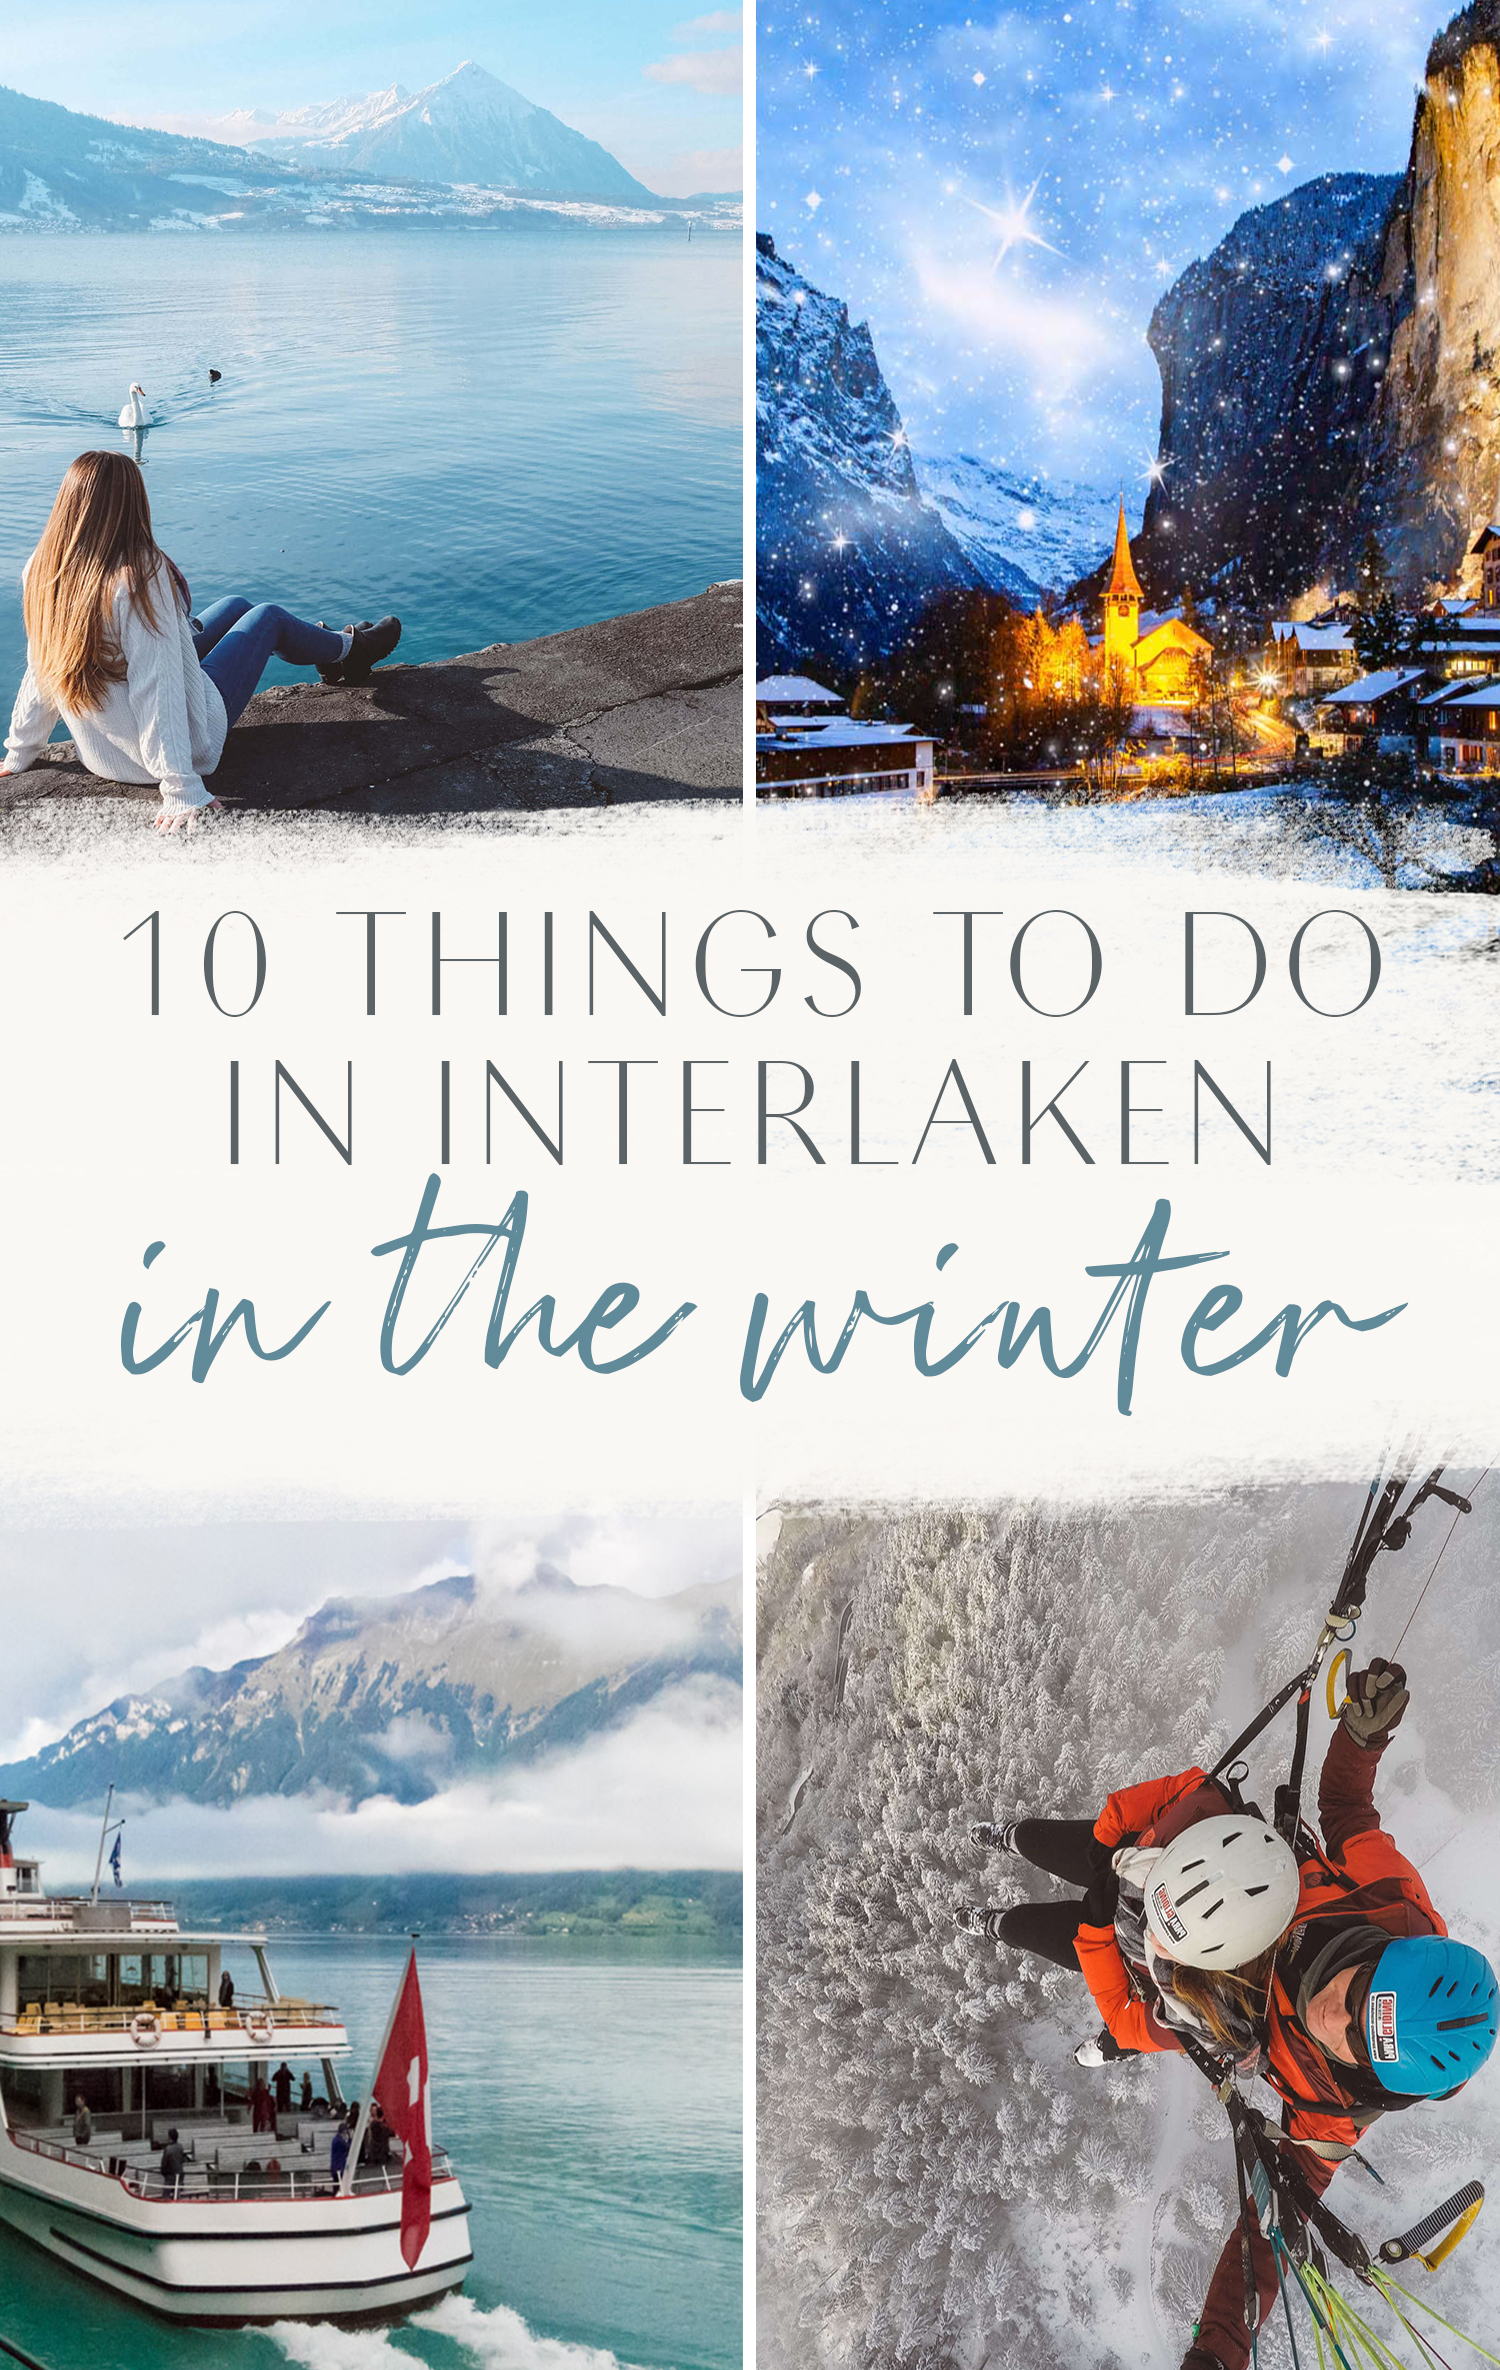 Top Things to Do in Interlaken